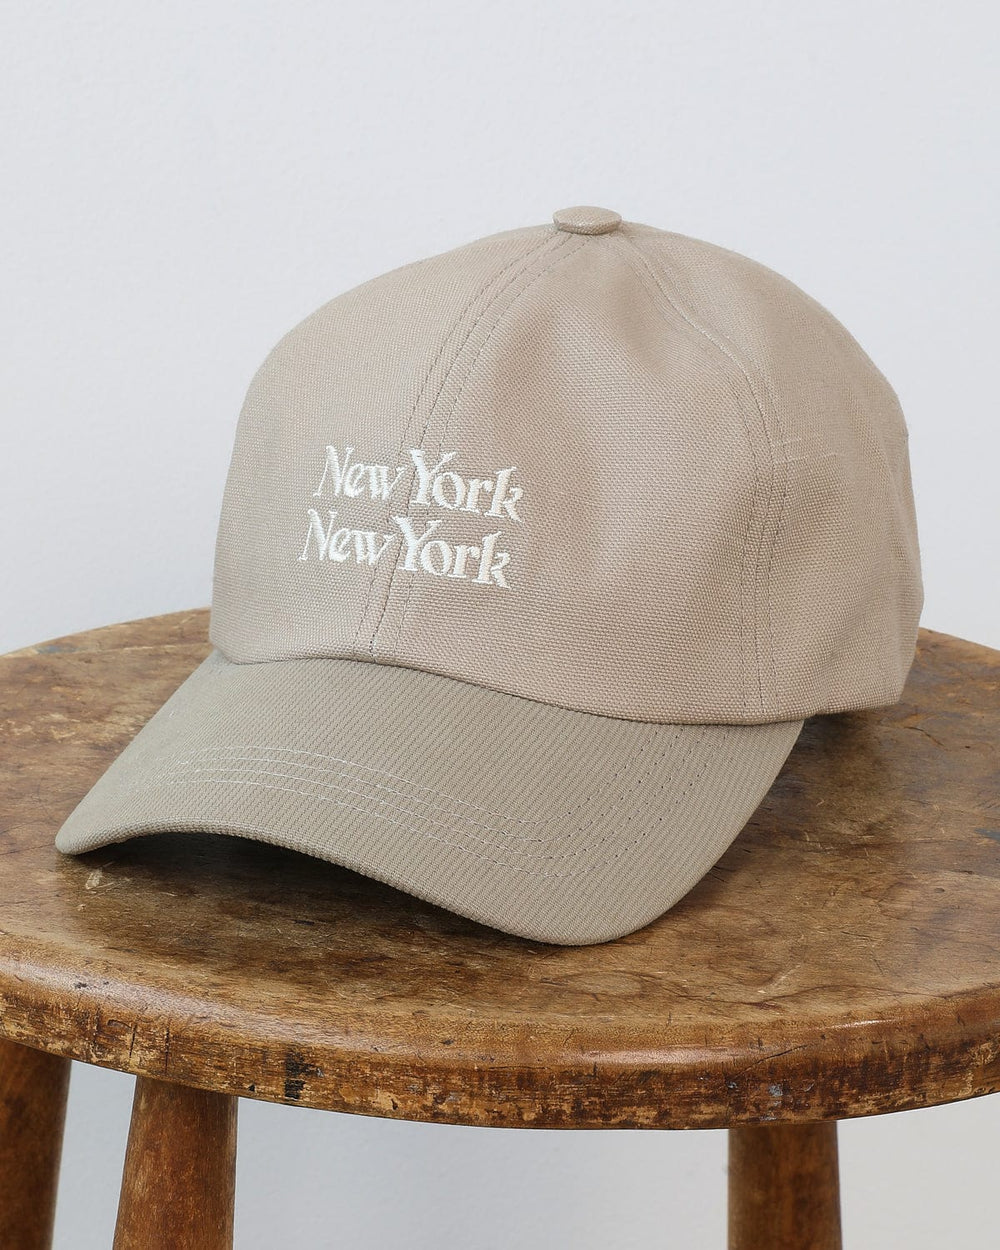 New York New York Cap - Navy – Corridor